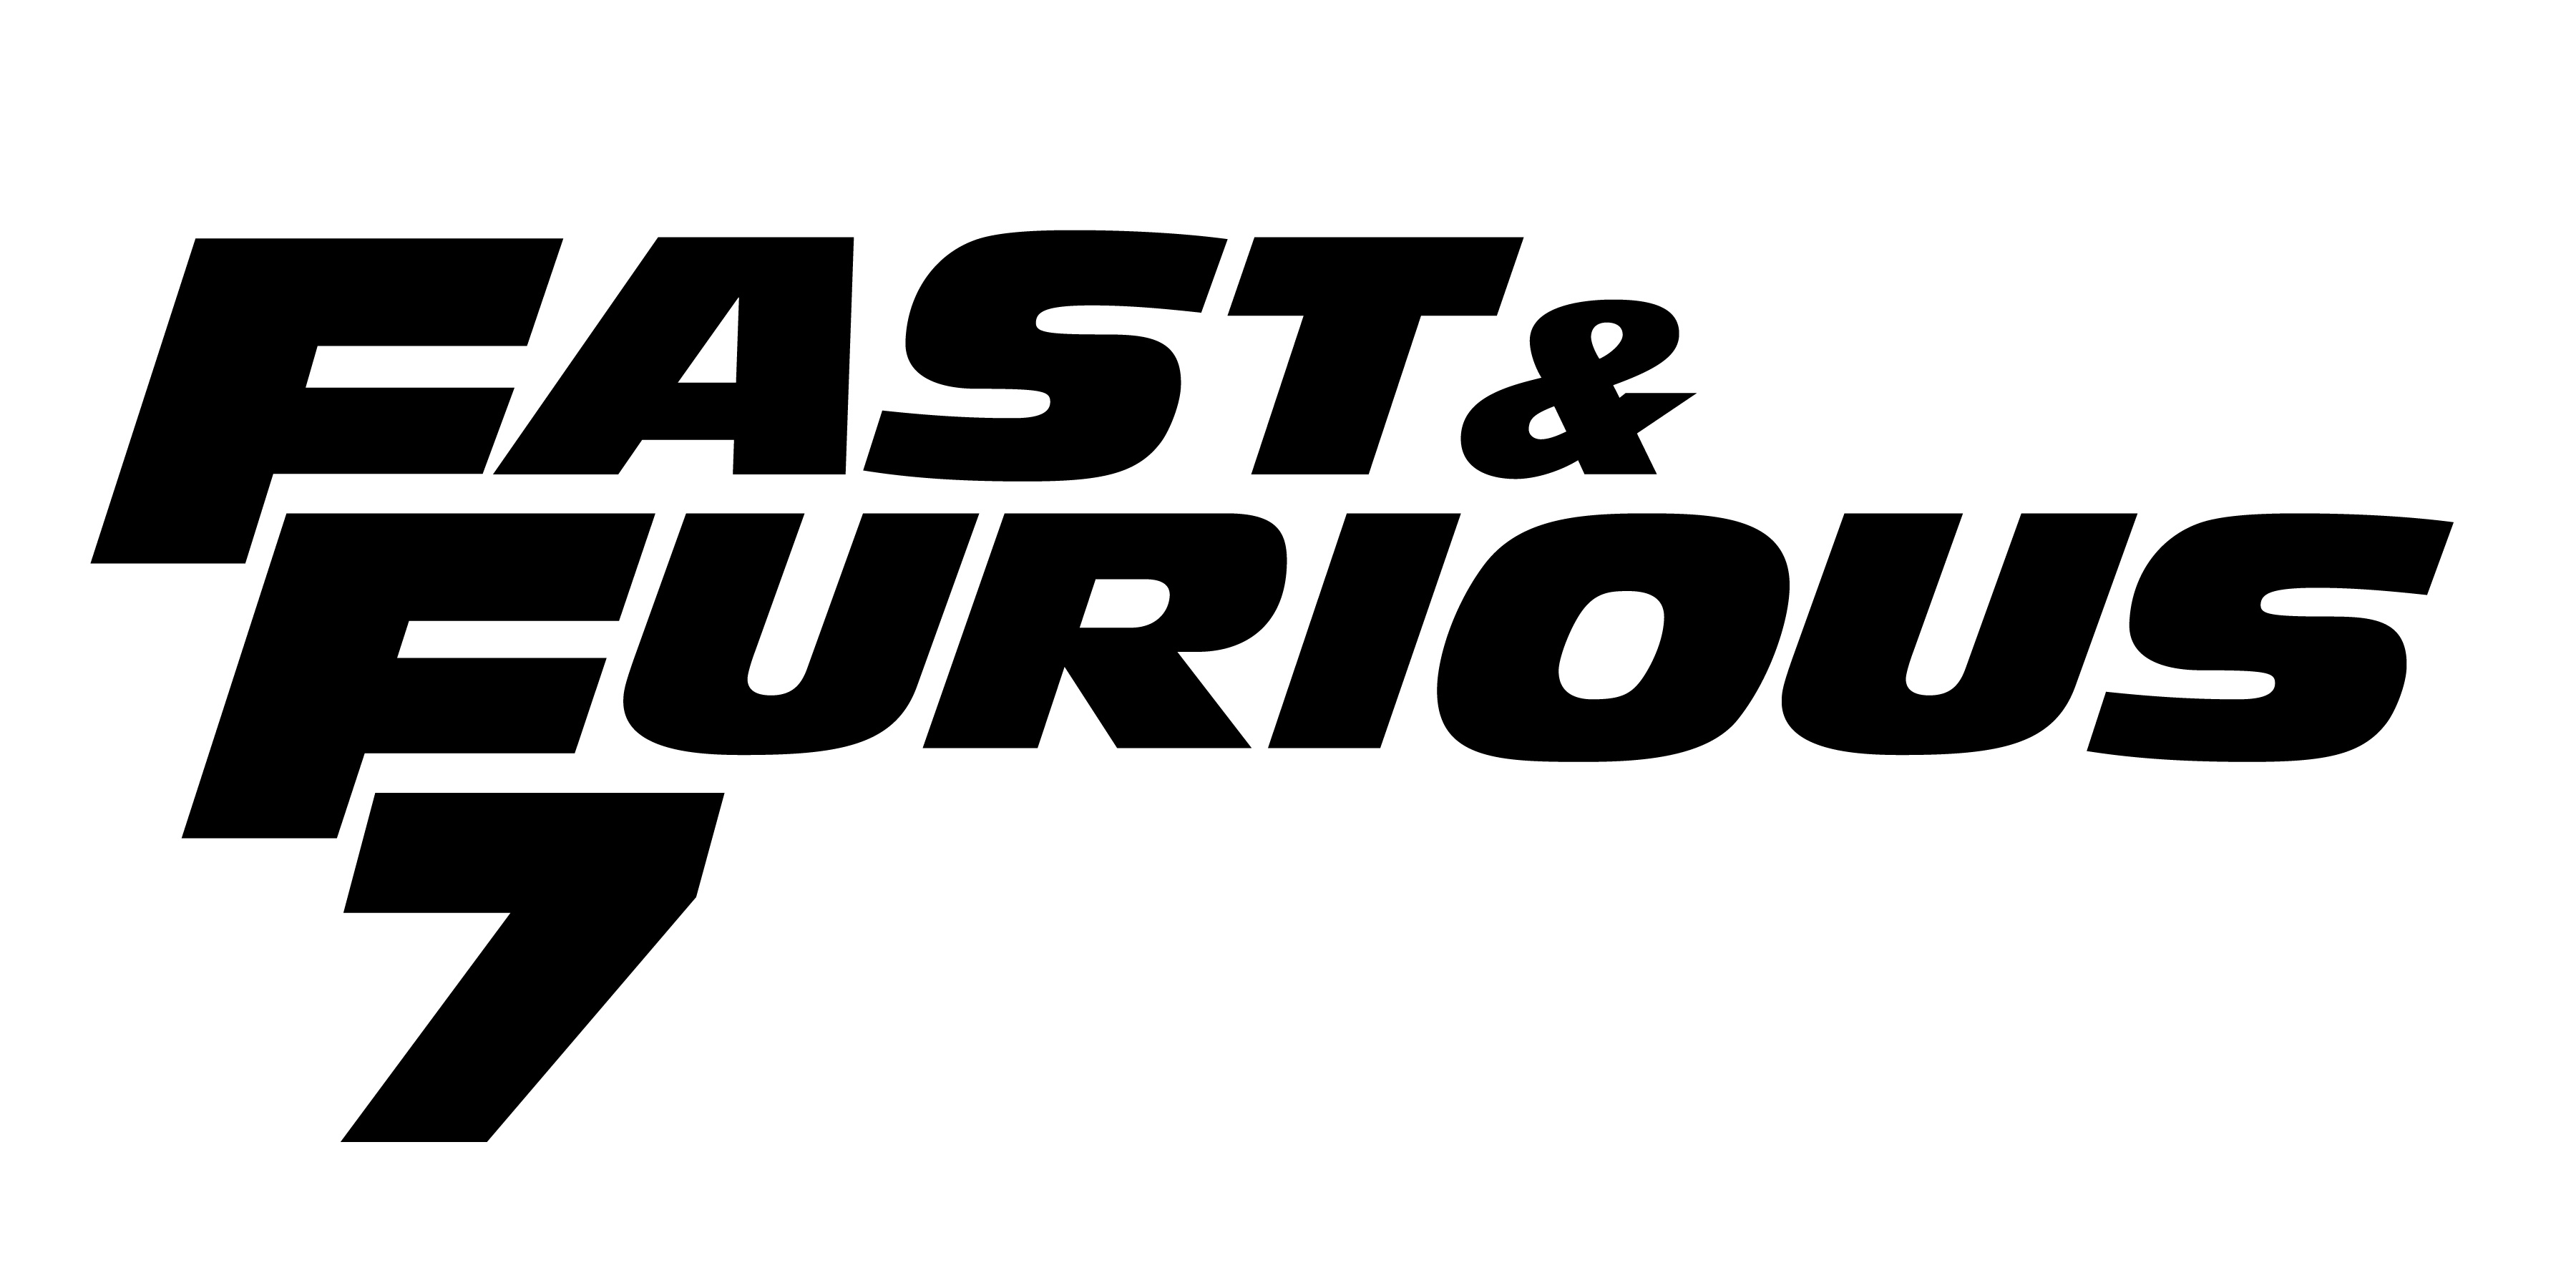 Furious 7, Iconic logos, High-octane sequel, Fast and furious action, 3600x1800 Dual Screen Desktop